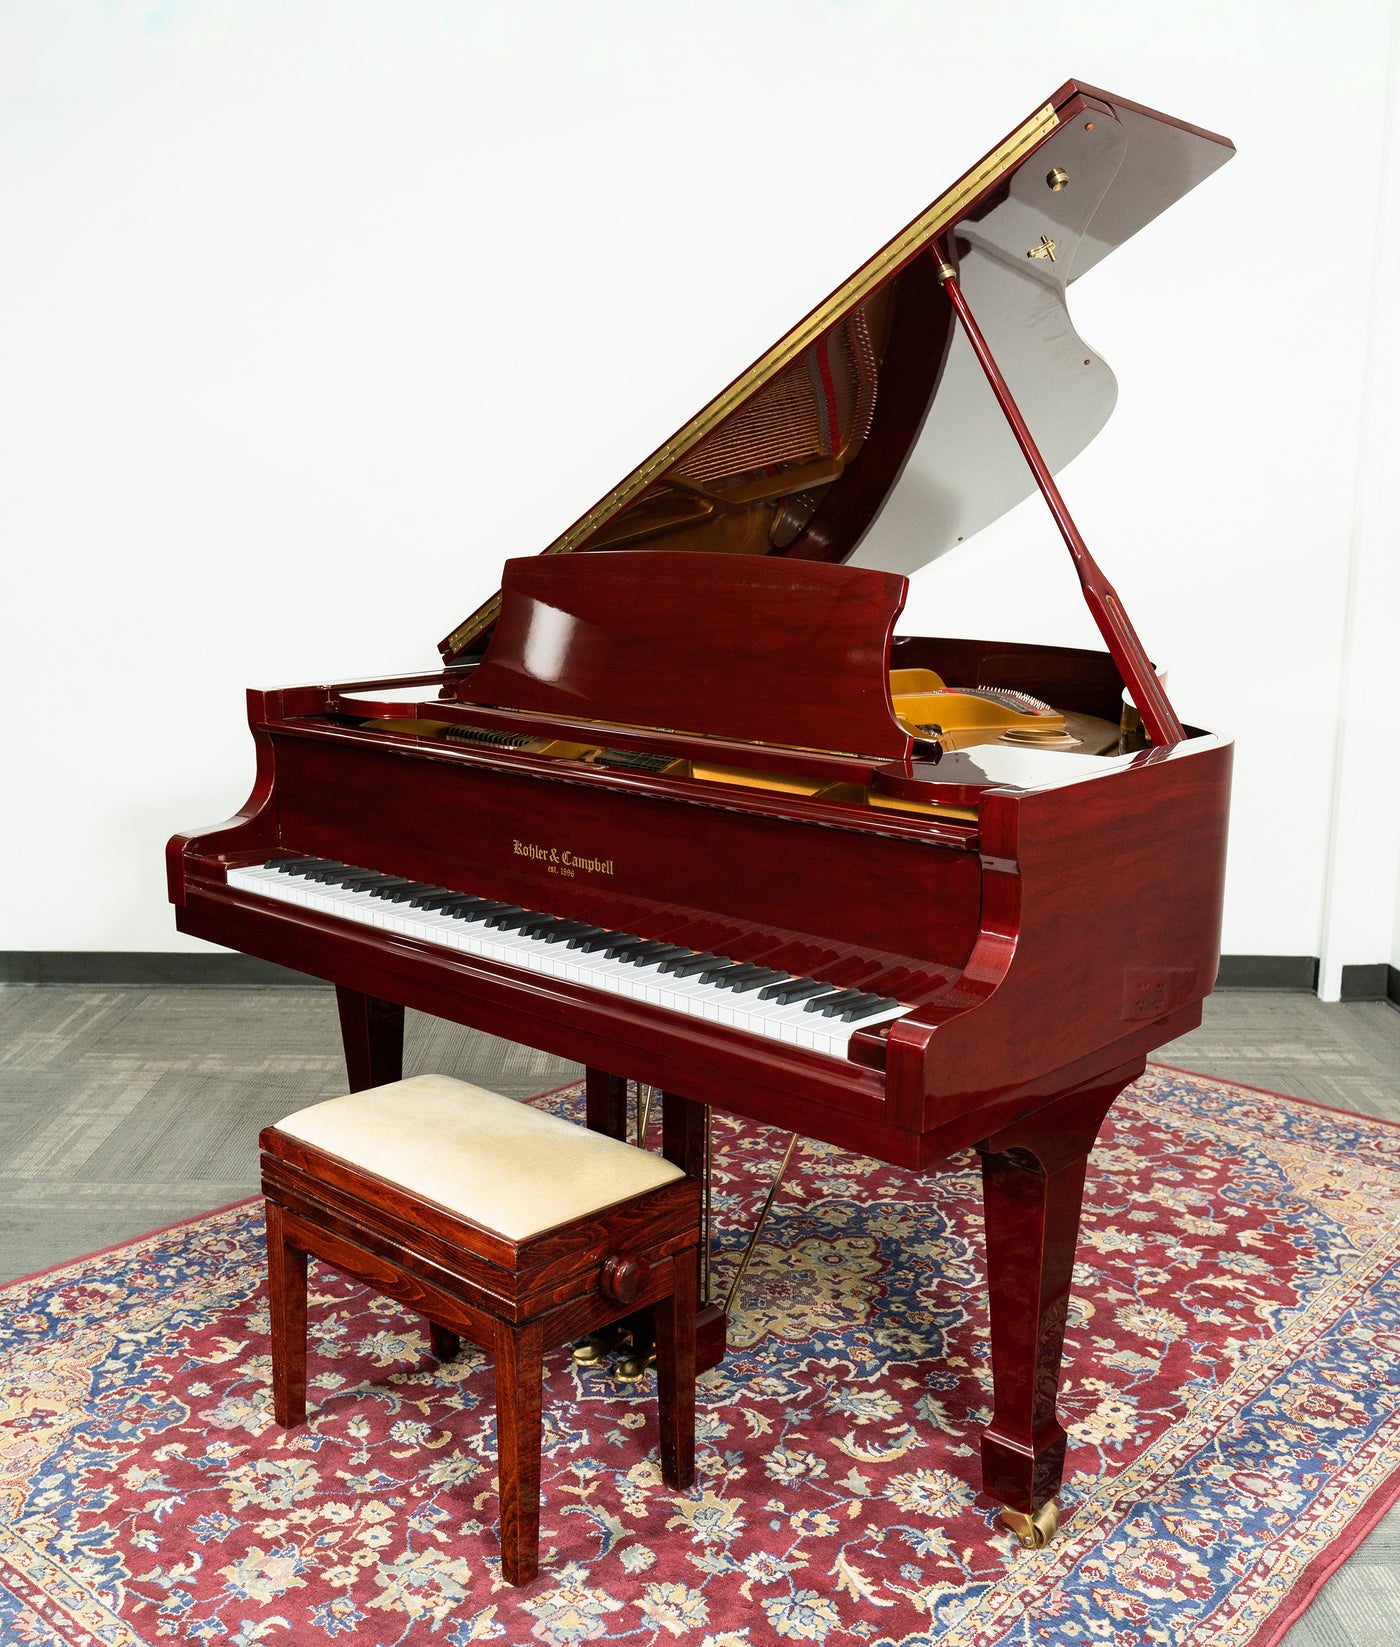 Kohler & Campbell 5'9? SKG600S Grand Piano | Polished Mahogany | SN: IREG0694 | Used